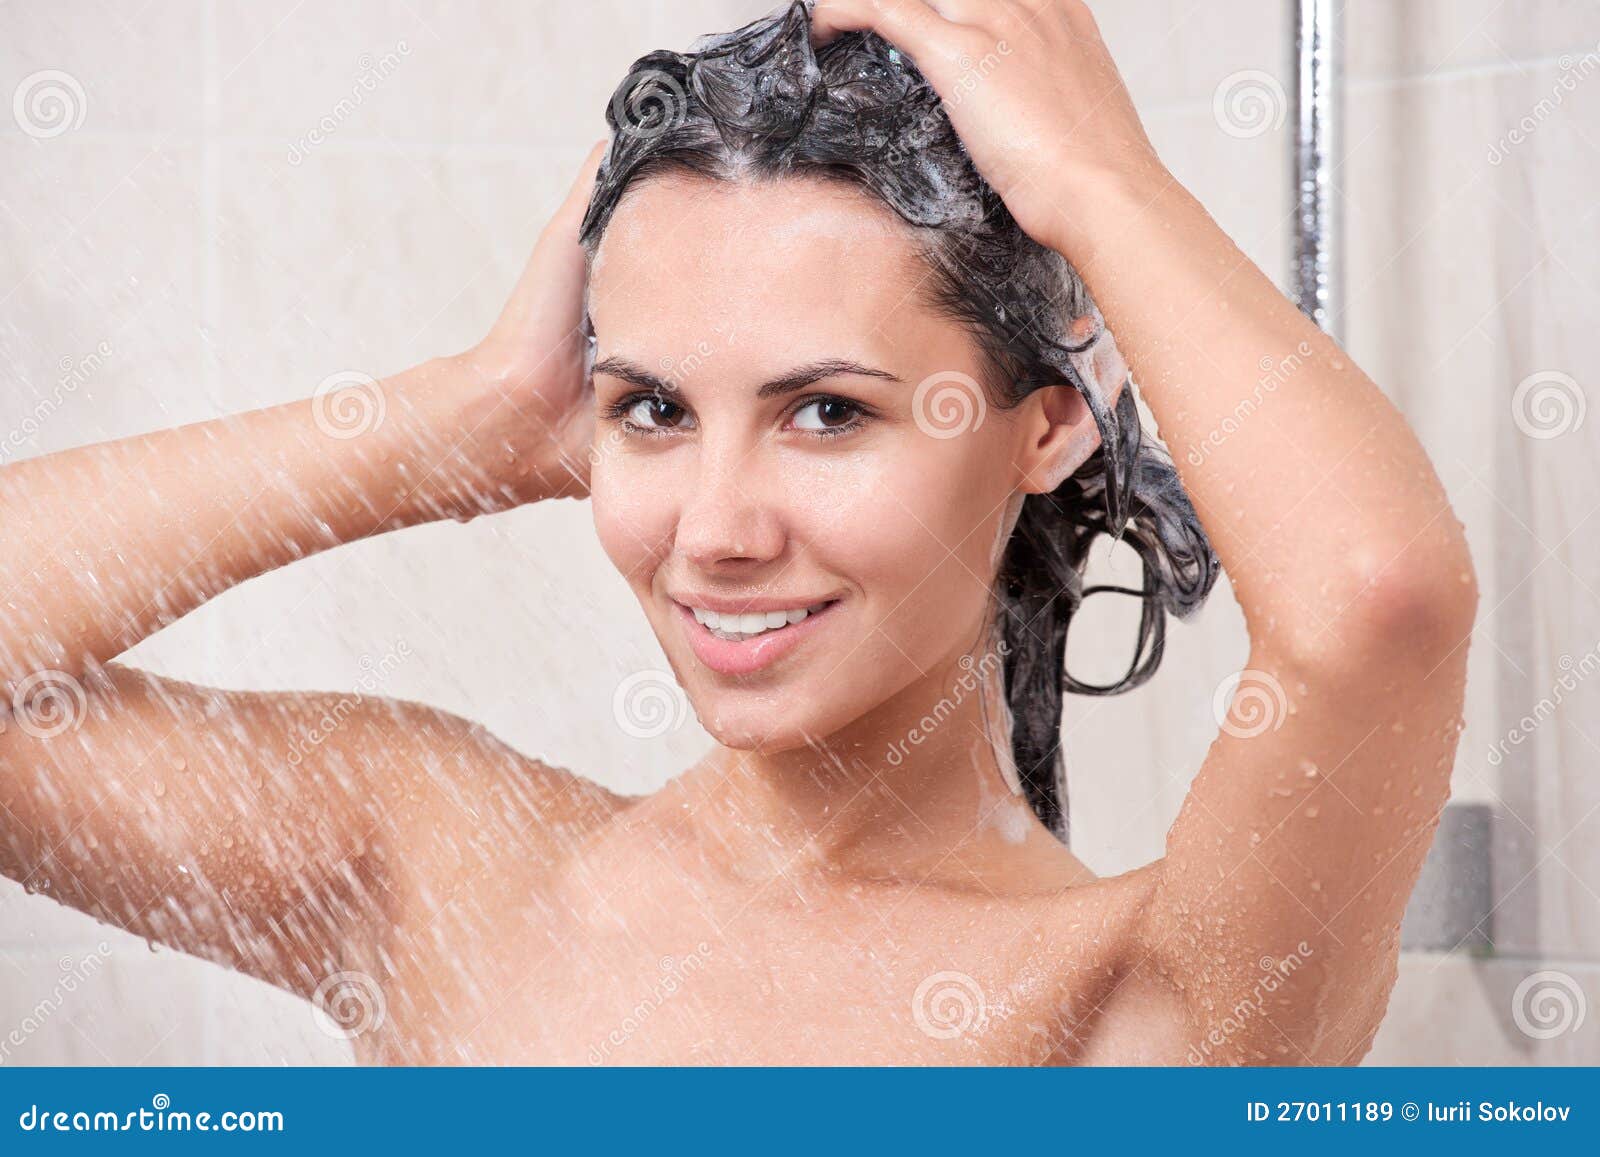 young woman washing head by shampoo